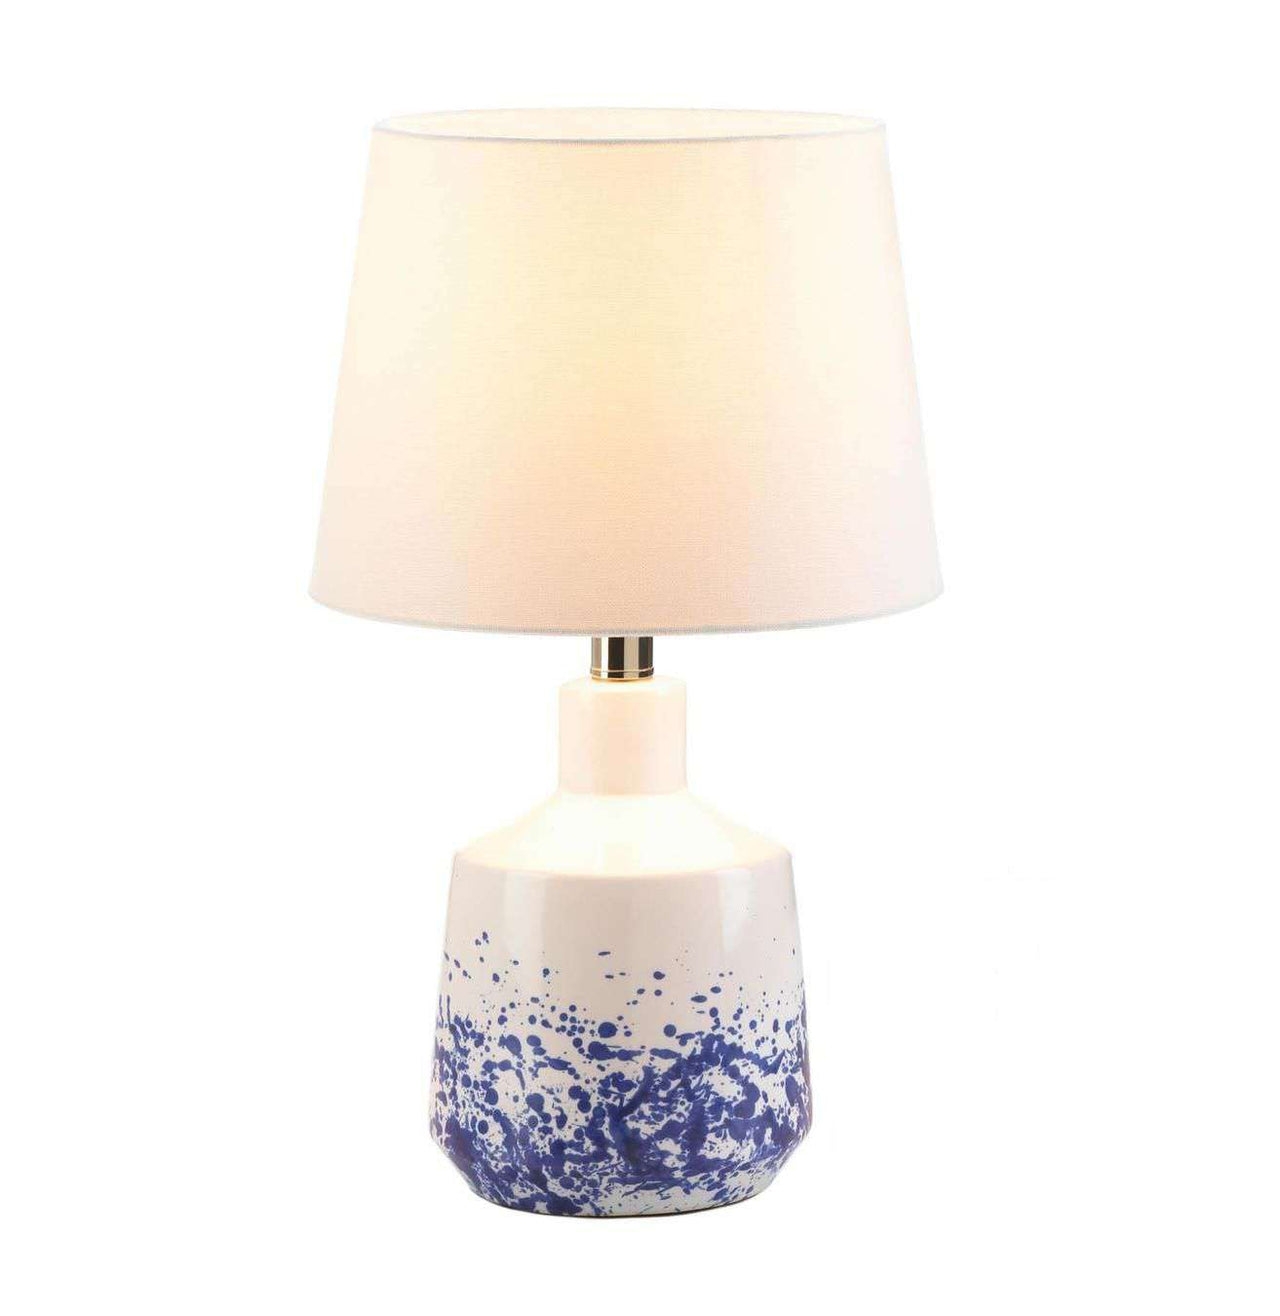 White & Blue Splash Table Lamp Accent Plus 